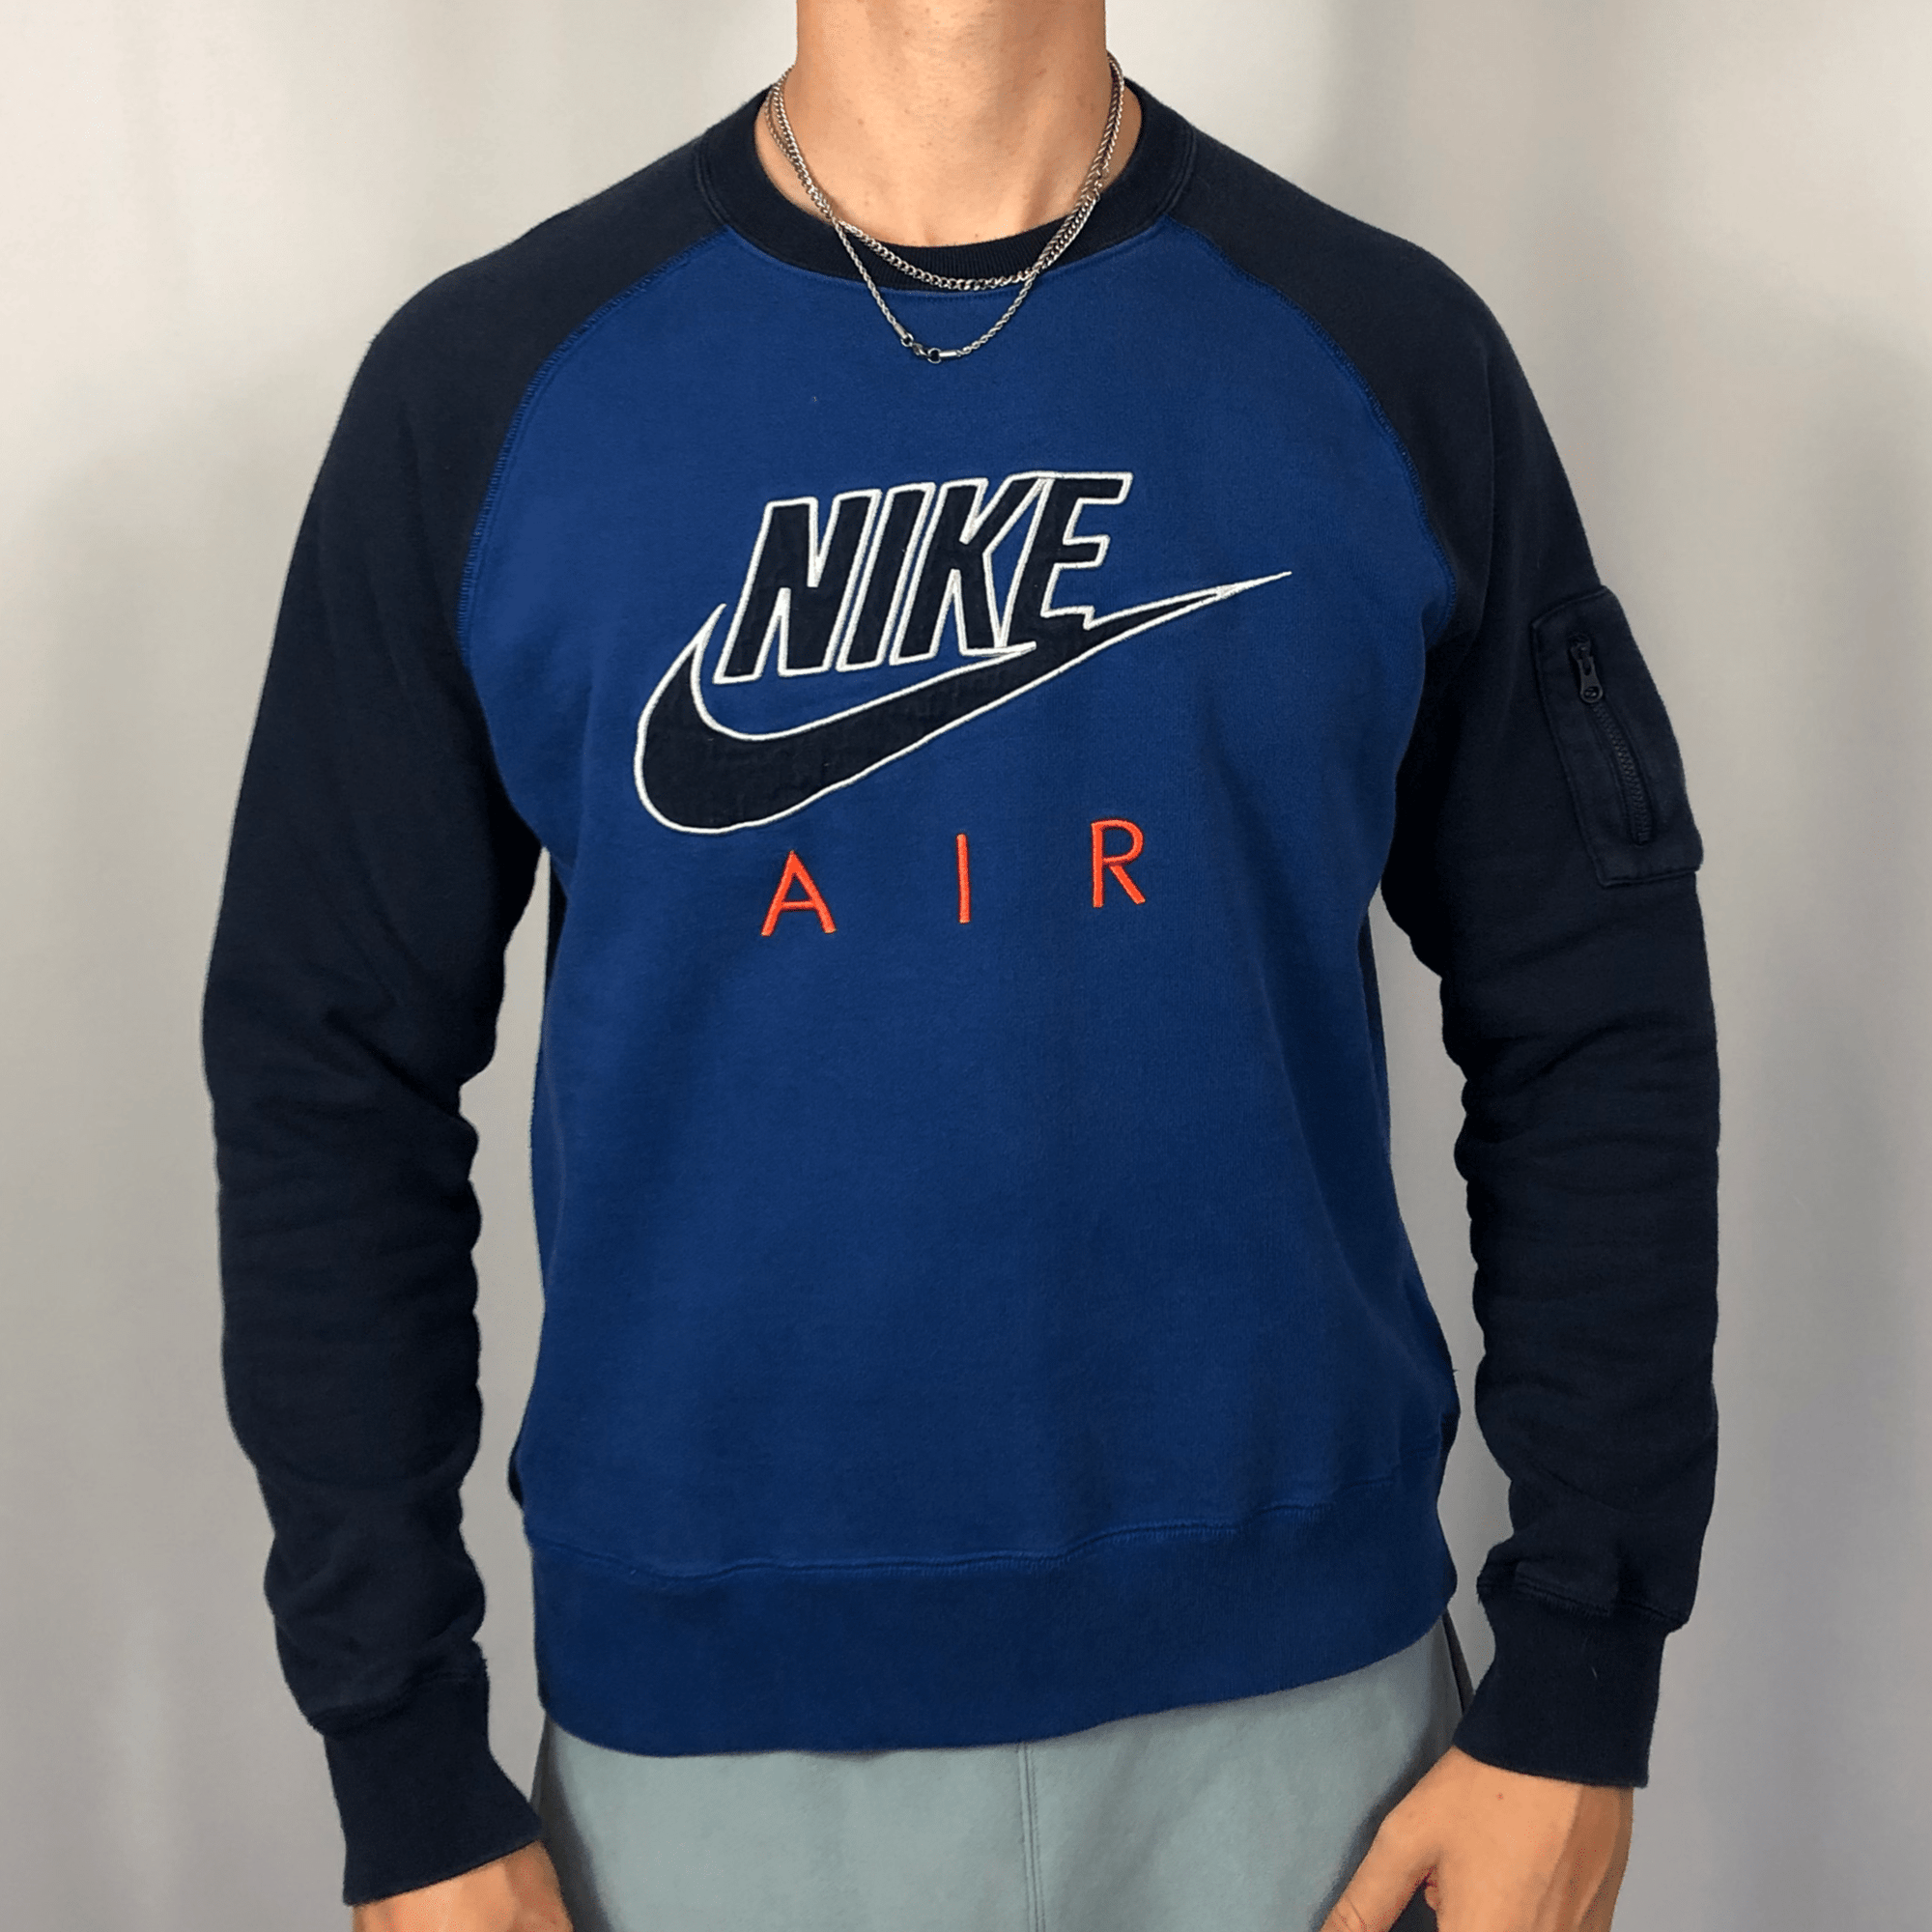 Vintage Nike Air Sweatshirt in Blue, Navy & Orange - Small/Medium - Vintique Clothing